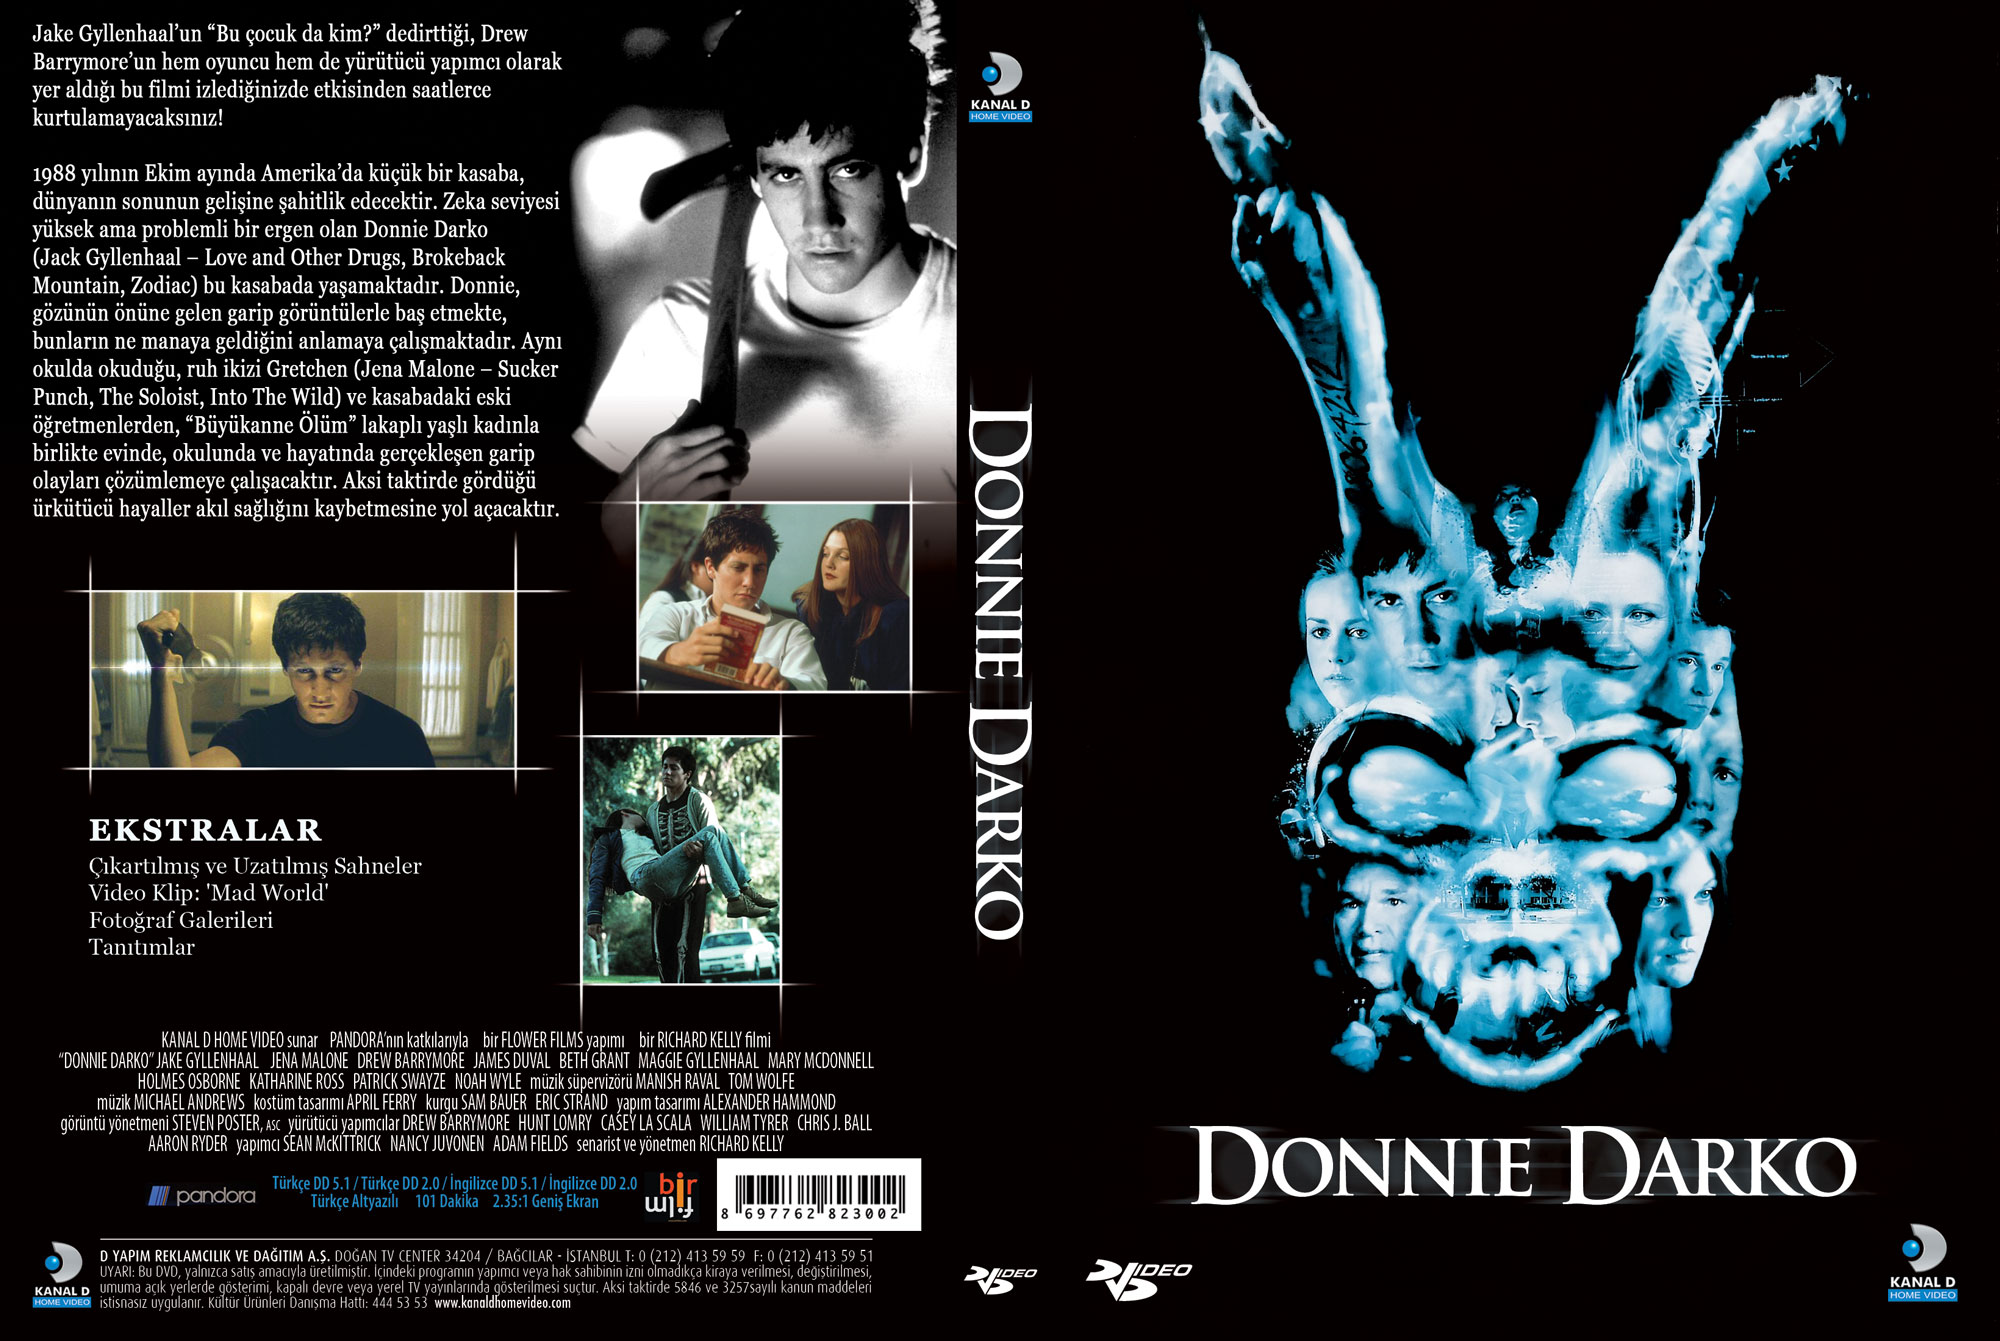 Download Donnie Darko 2001 Full Hd Quality